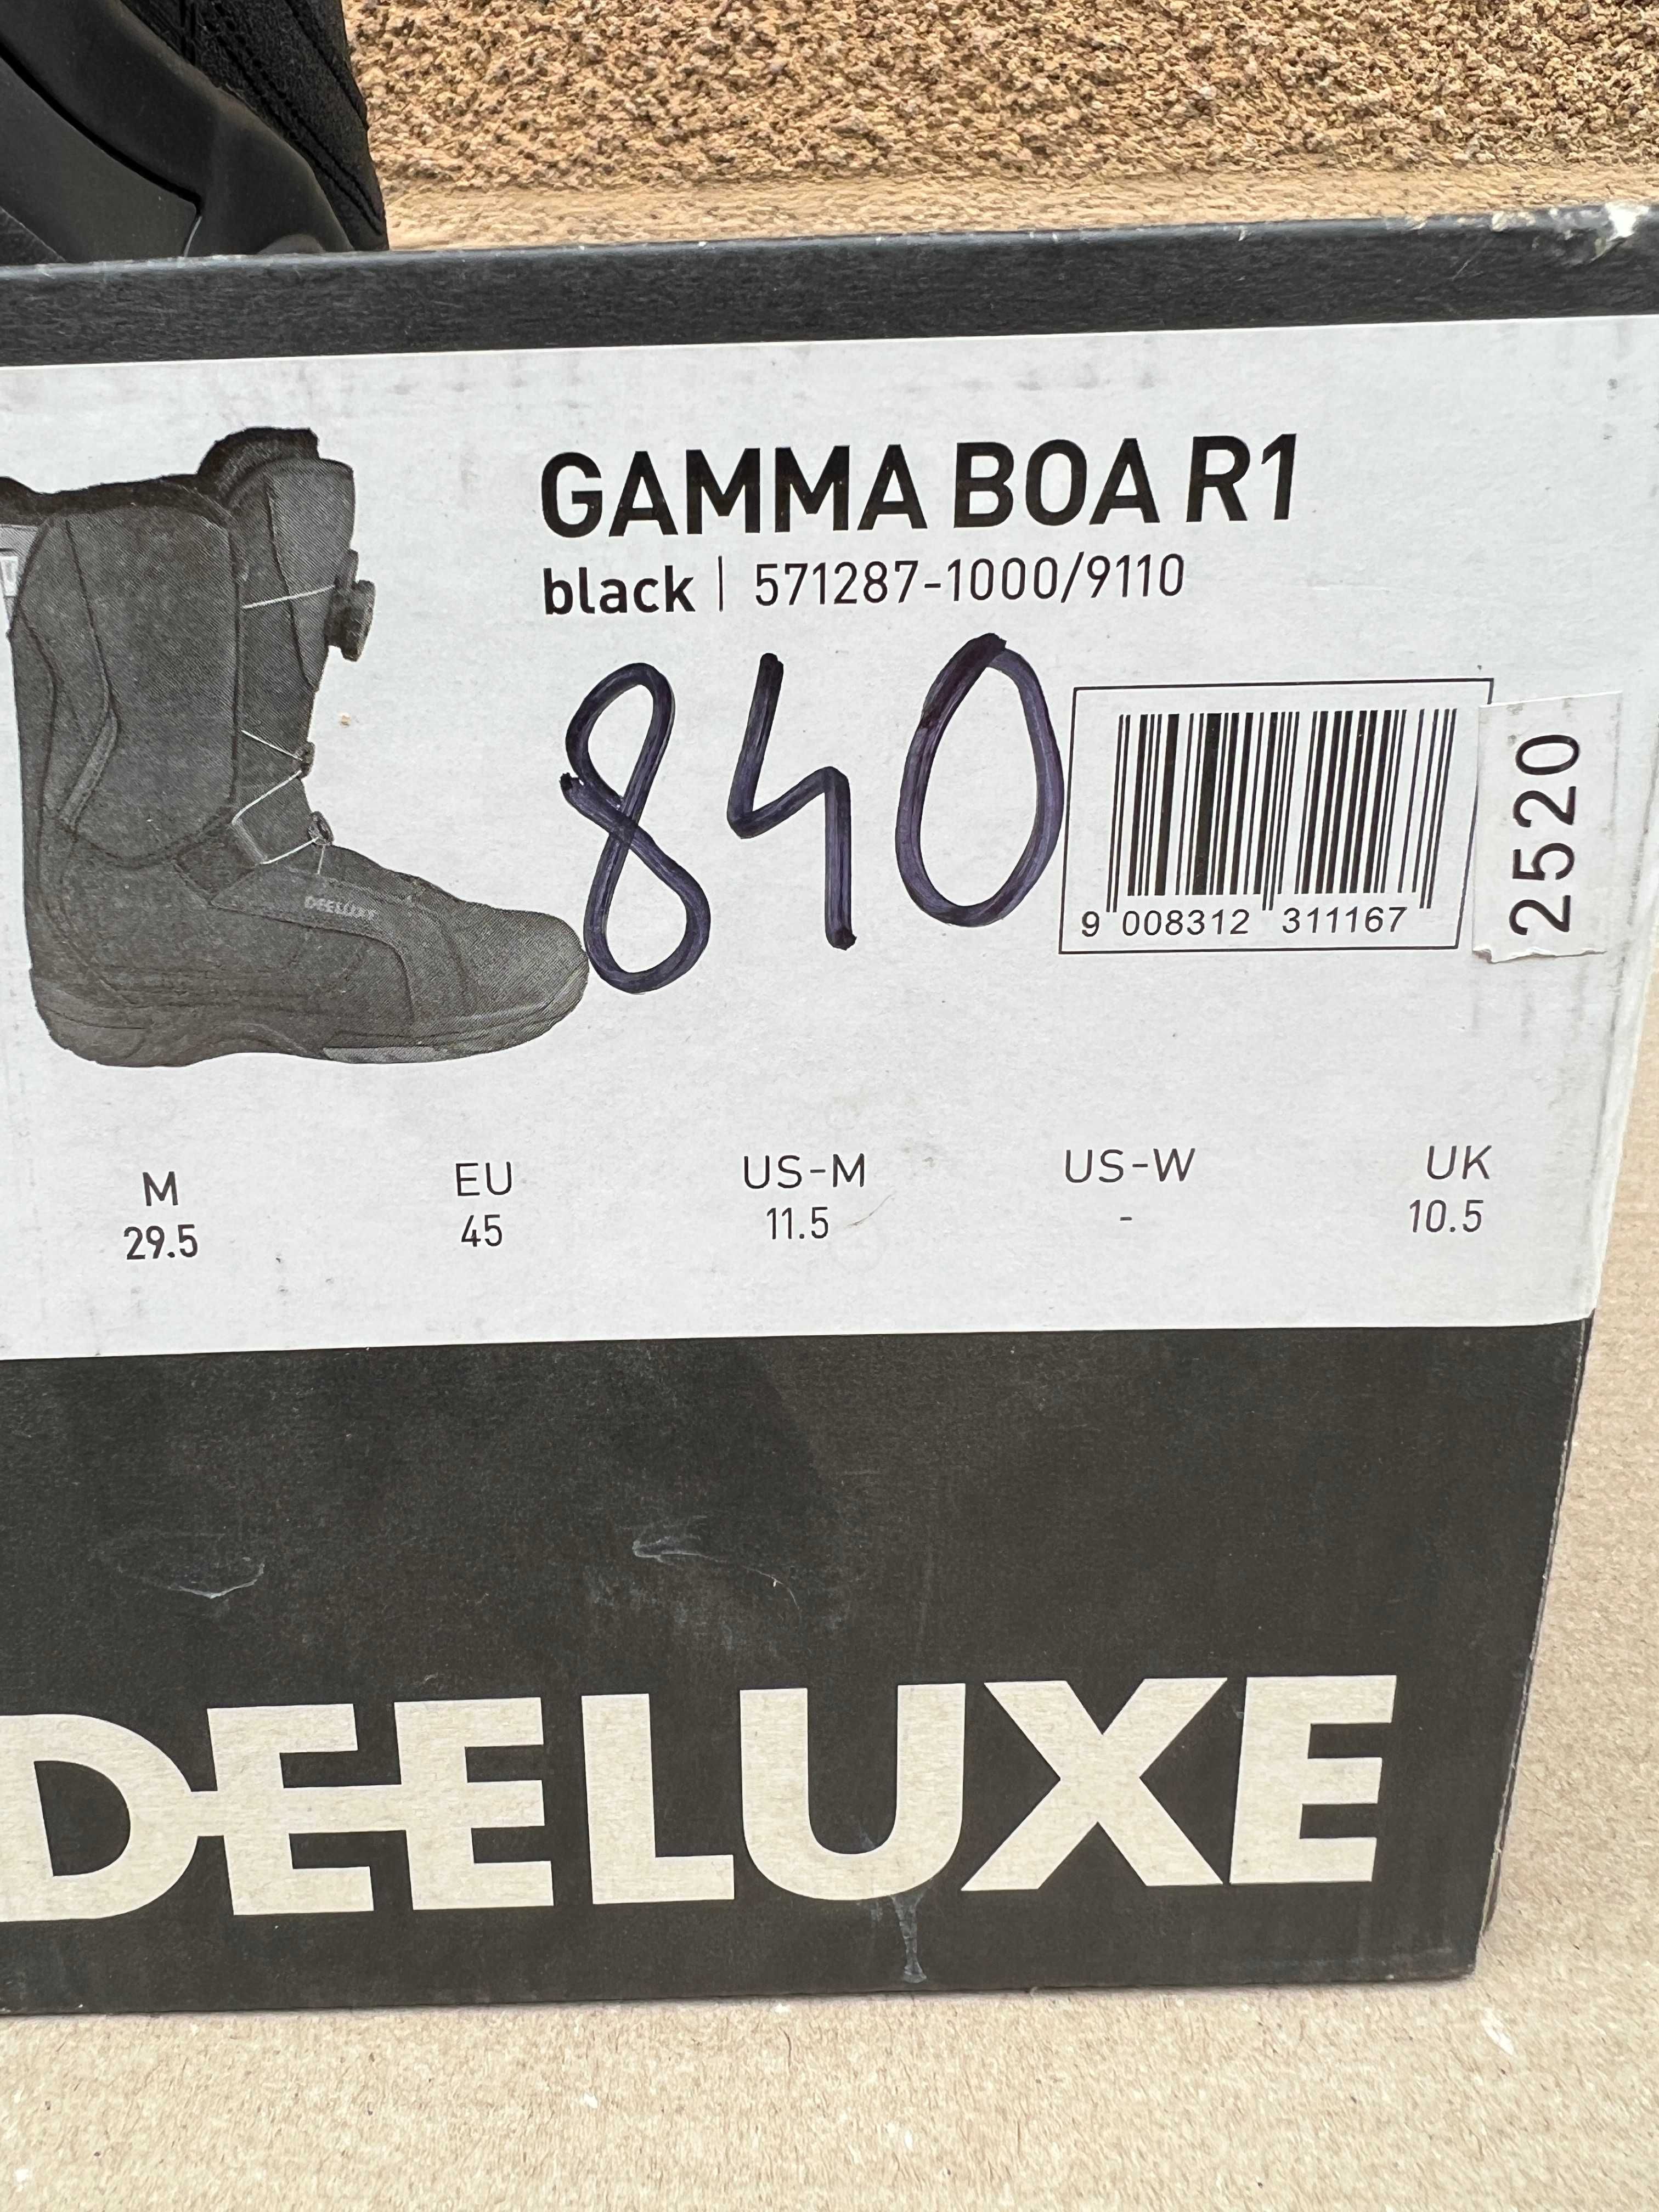 boots noi deeluxe gamma boa r1 29,5 mondo 45 europa